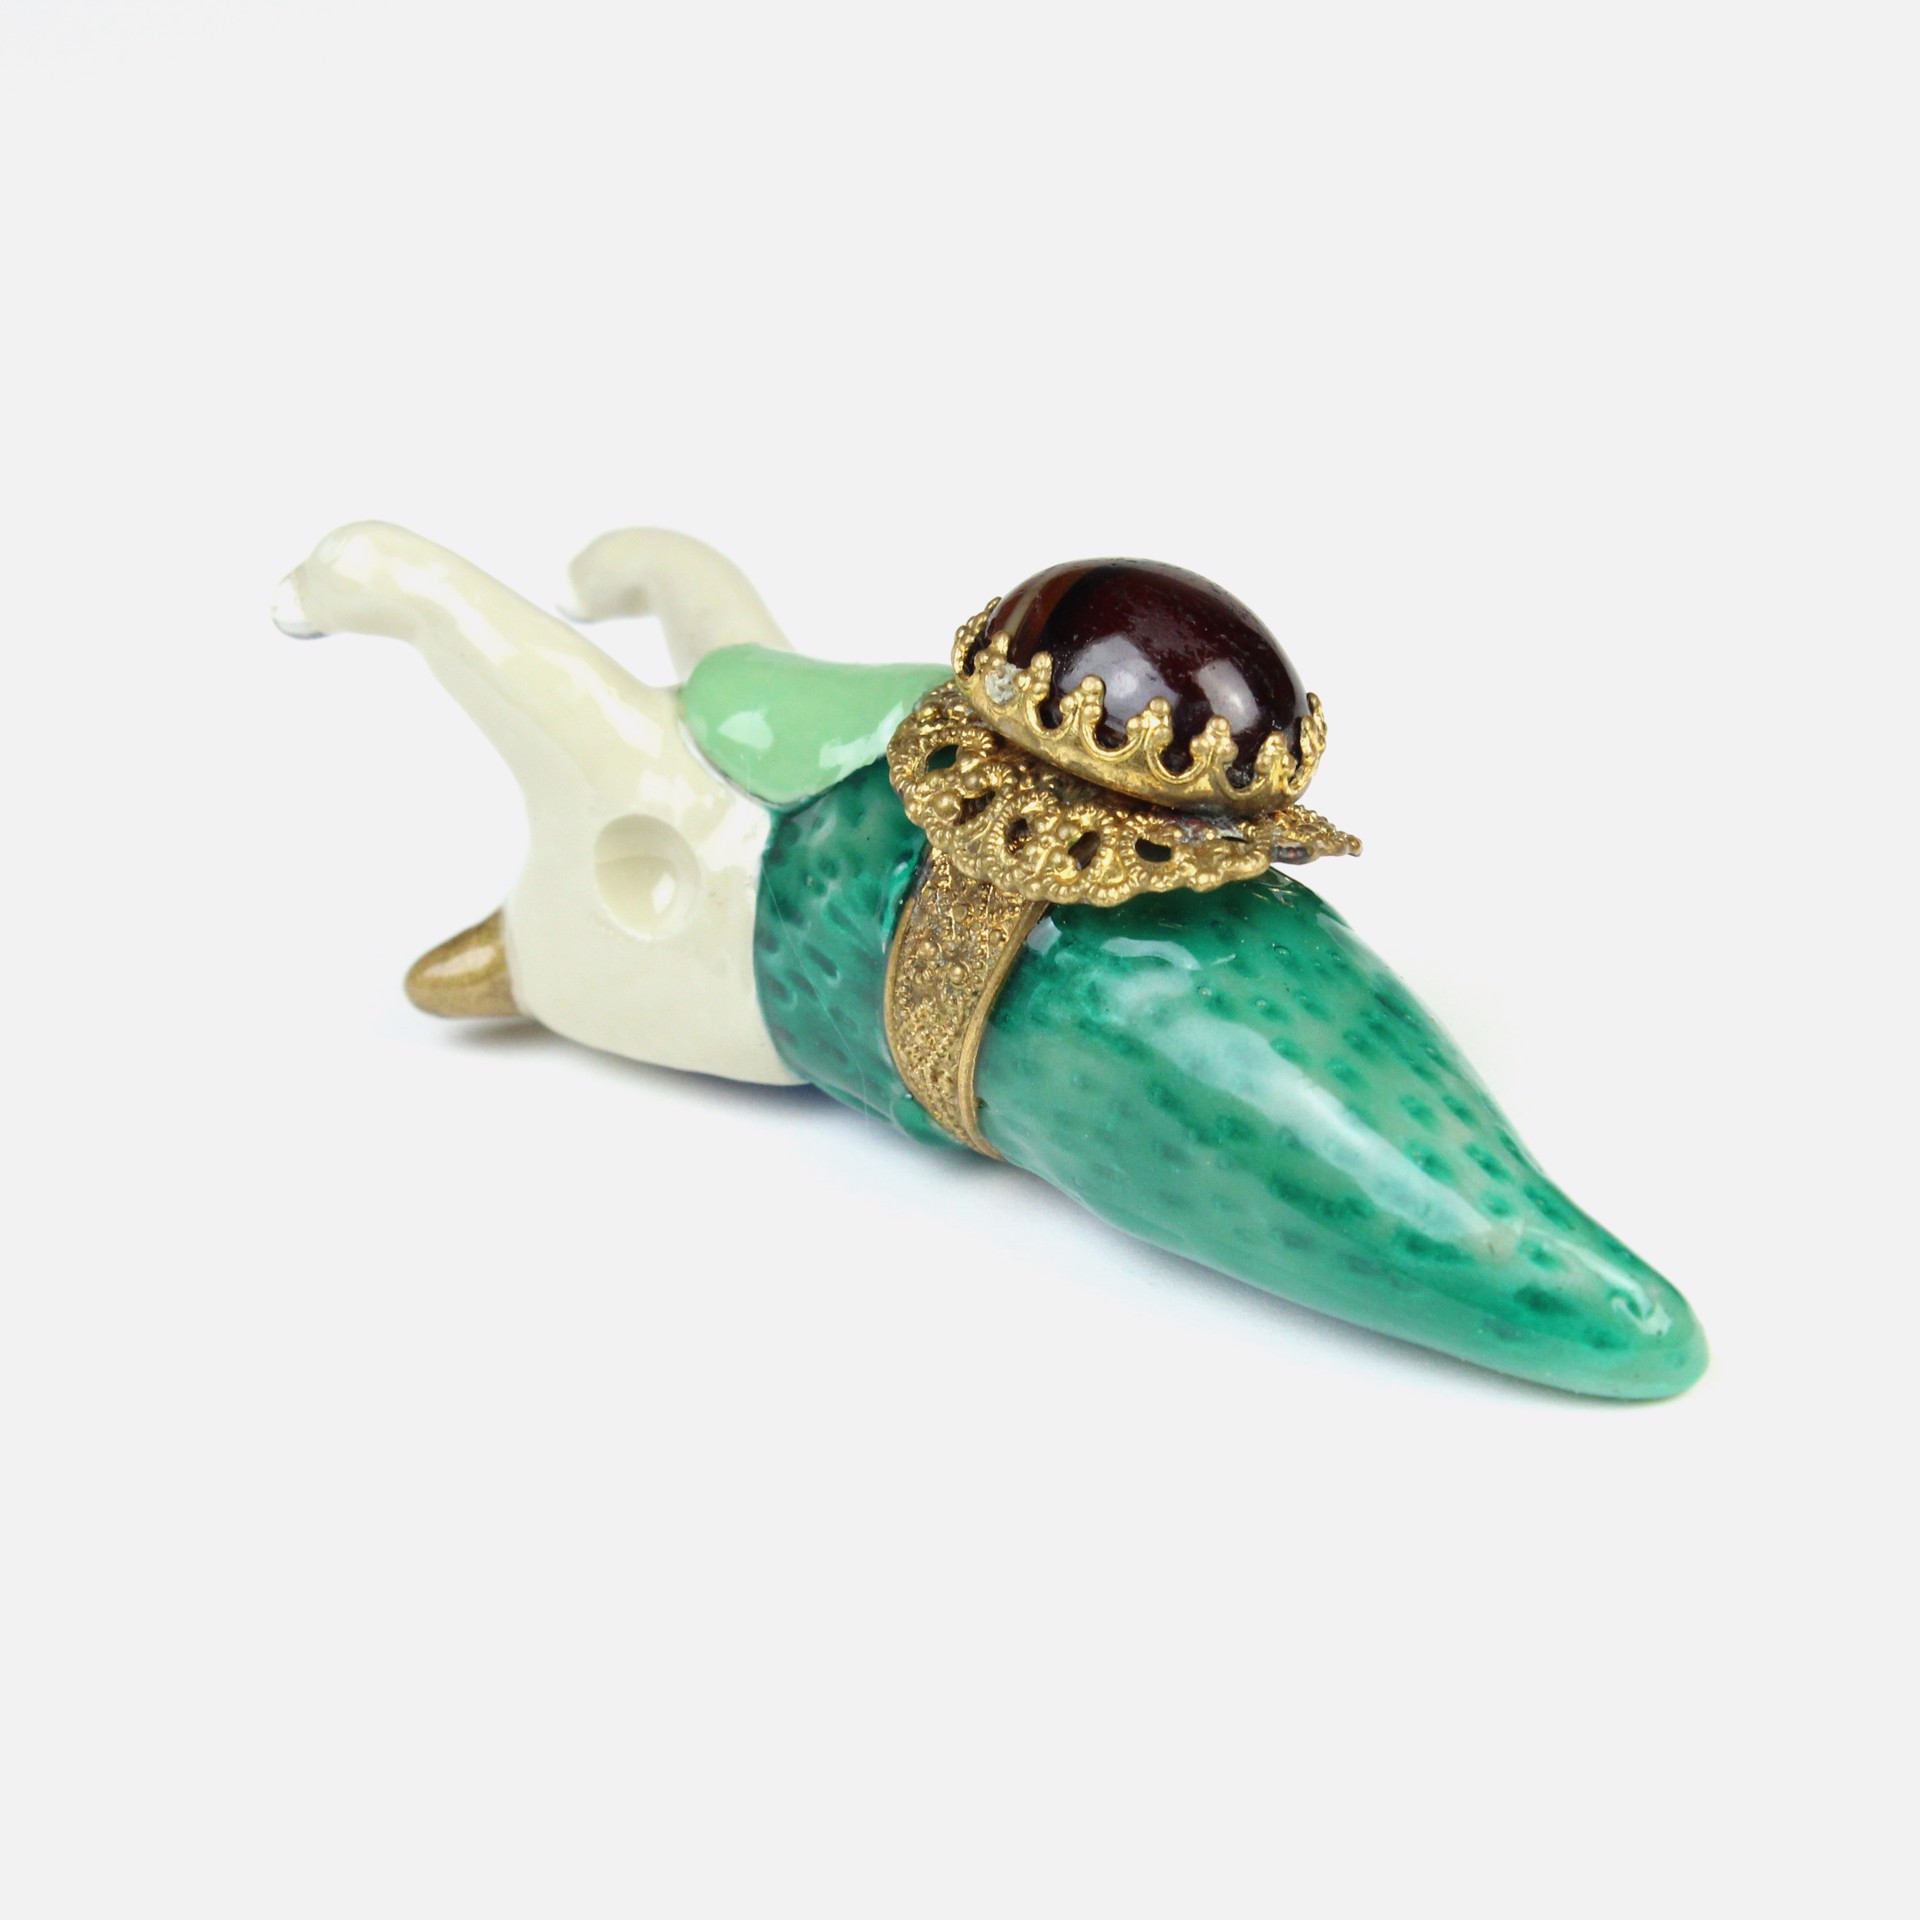 Flamboyant Slug (Brooch) by Märta Mattsson